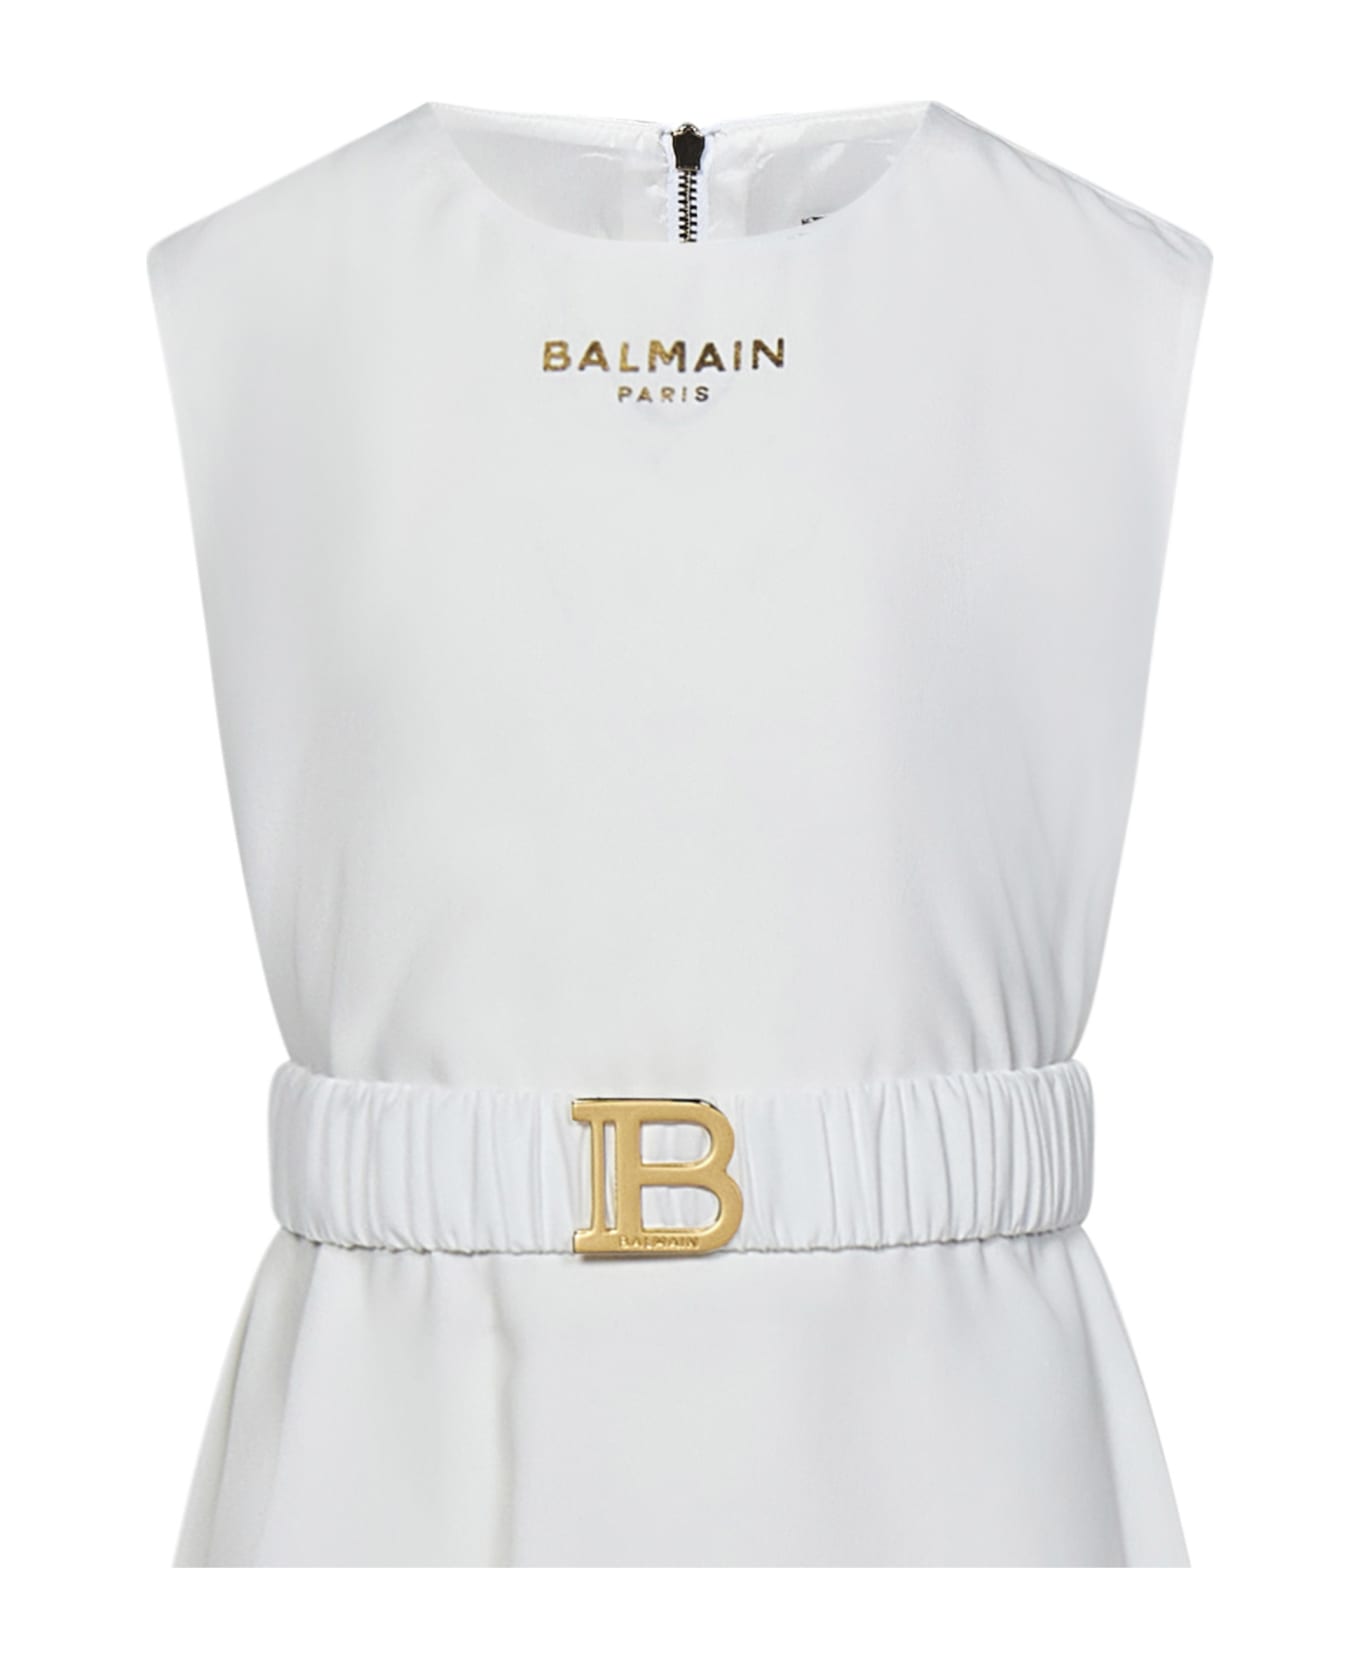 Balmain Dress - ivory/gold